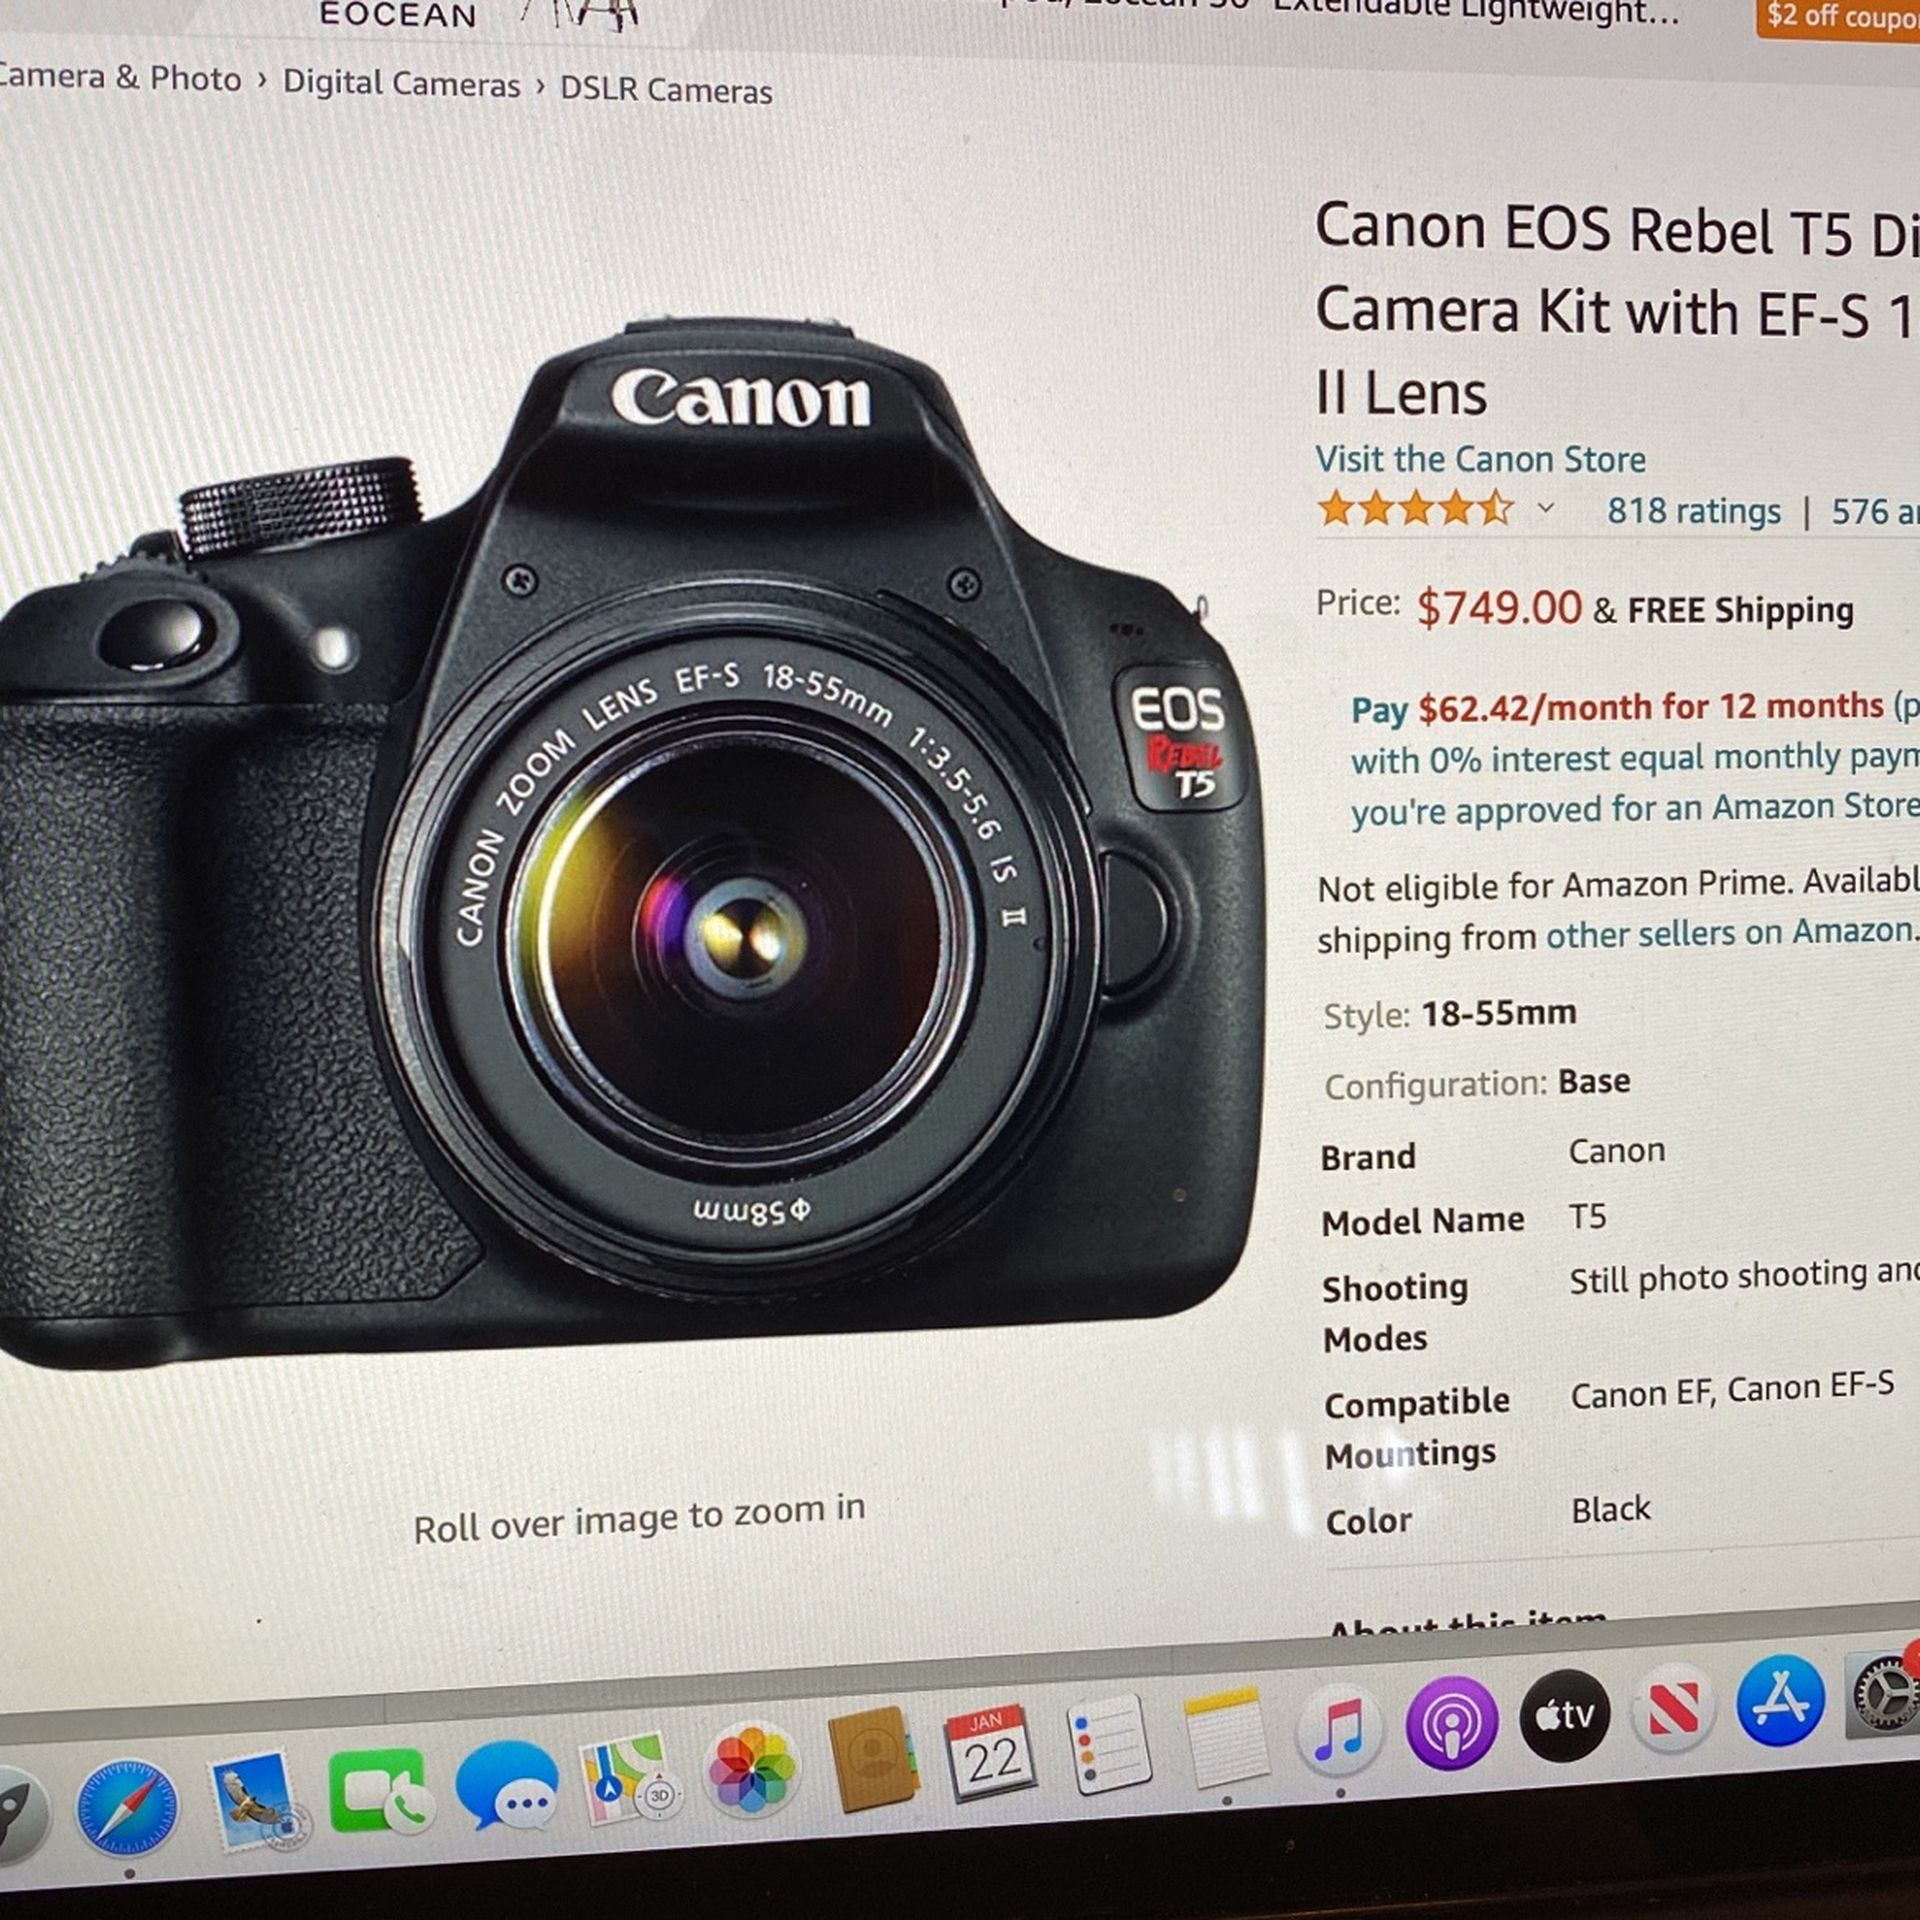 Canon EOS Rebel T5 Digitial SLR Camera Kit Eith EF-S 18-55mm Lens